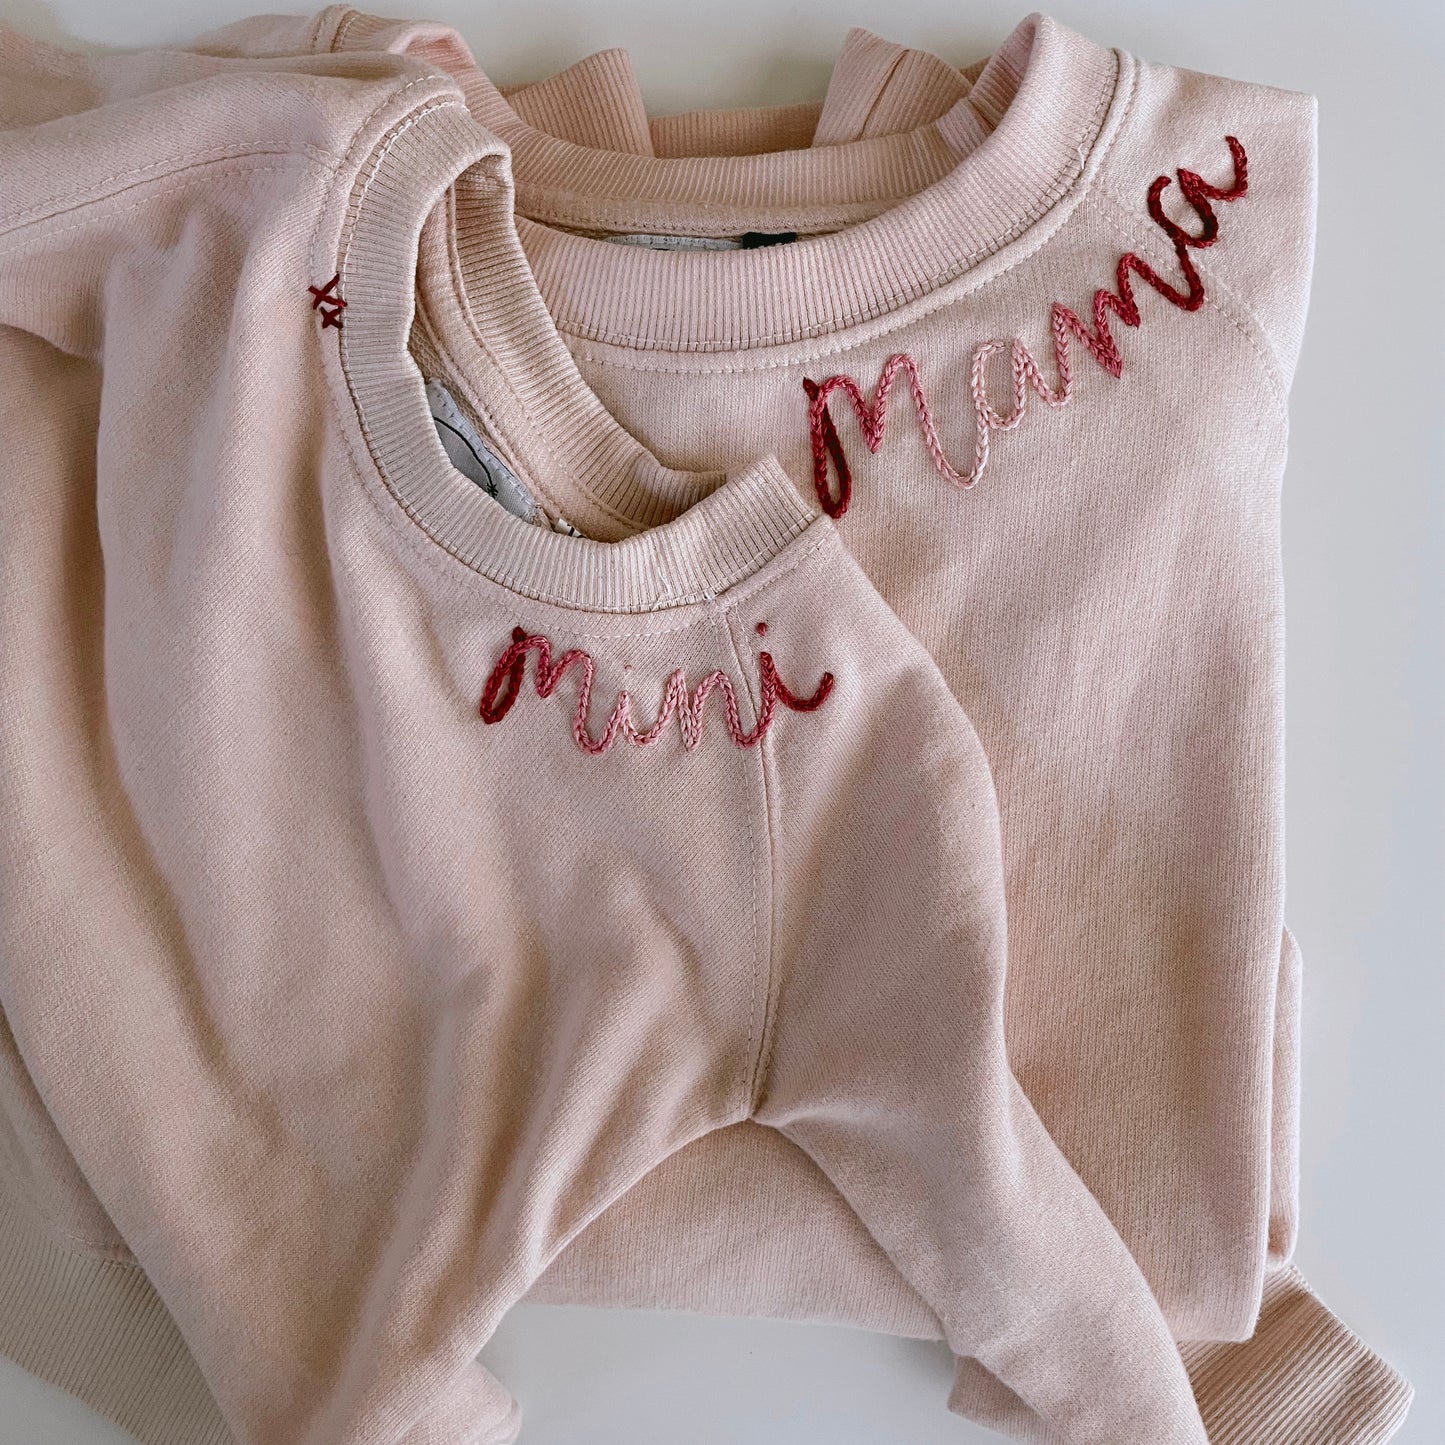 MAMA and MINI hand embroidered matching sweatshirt - DUSTY ROSE